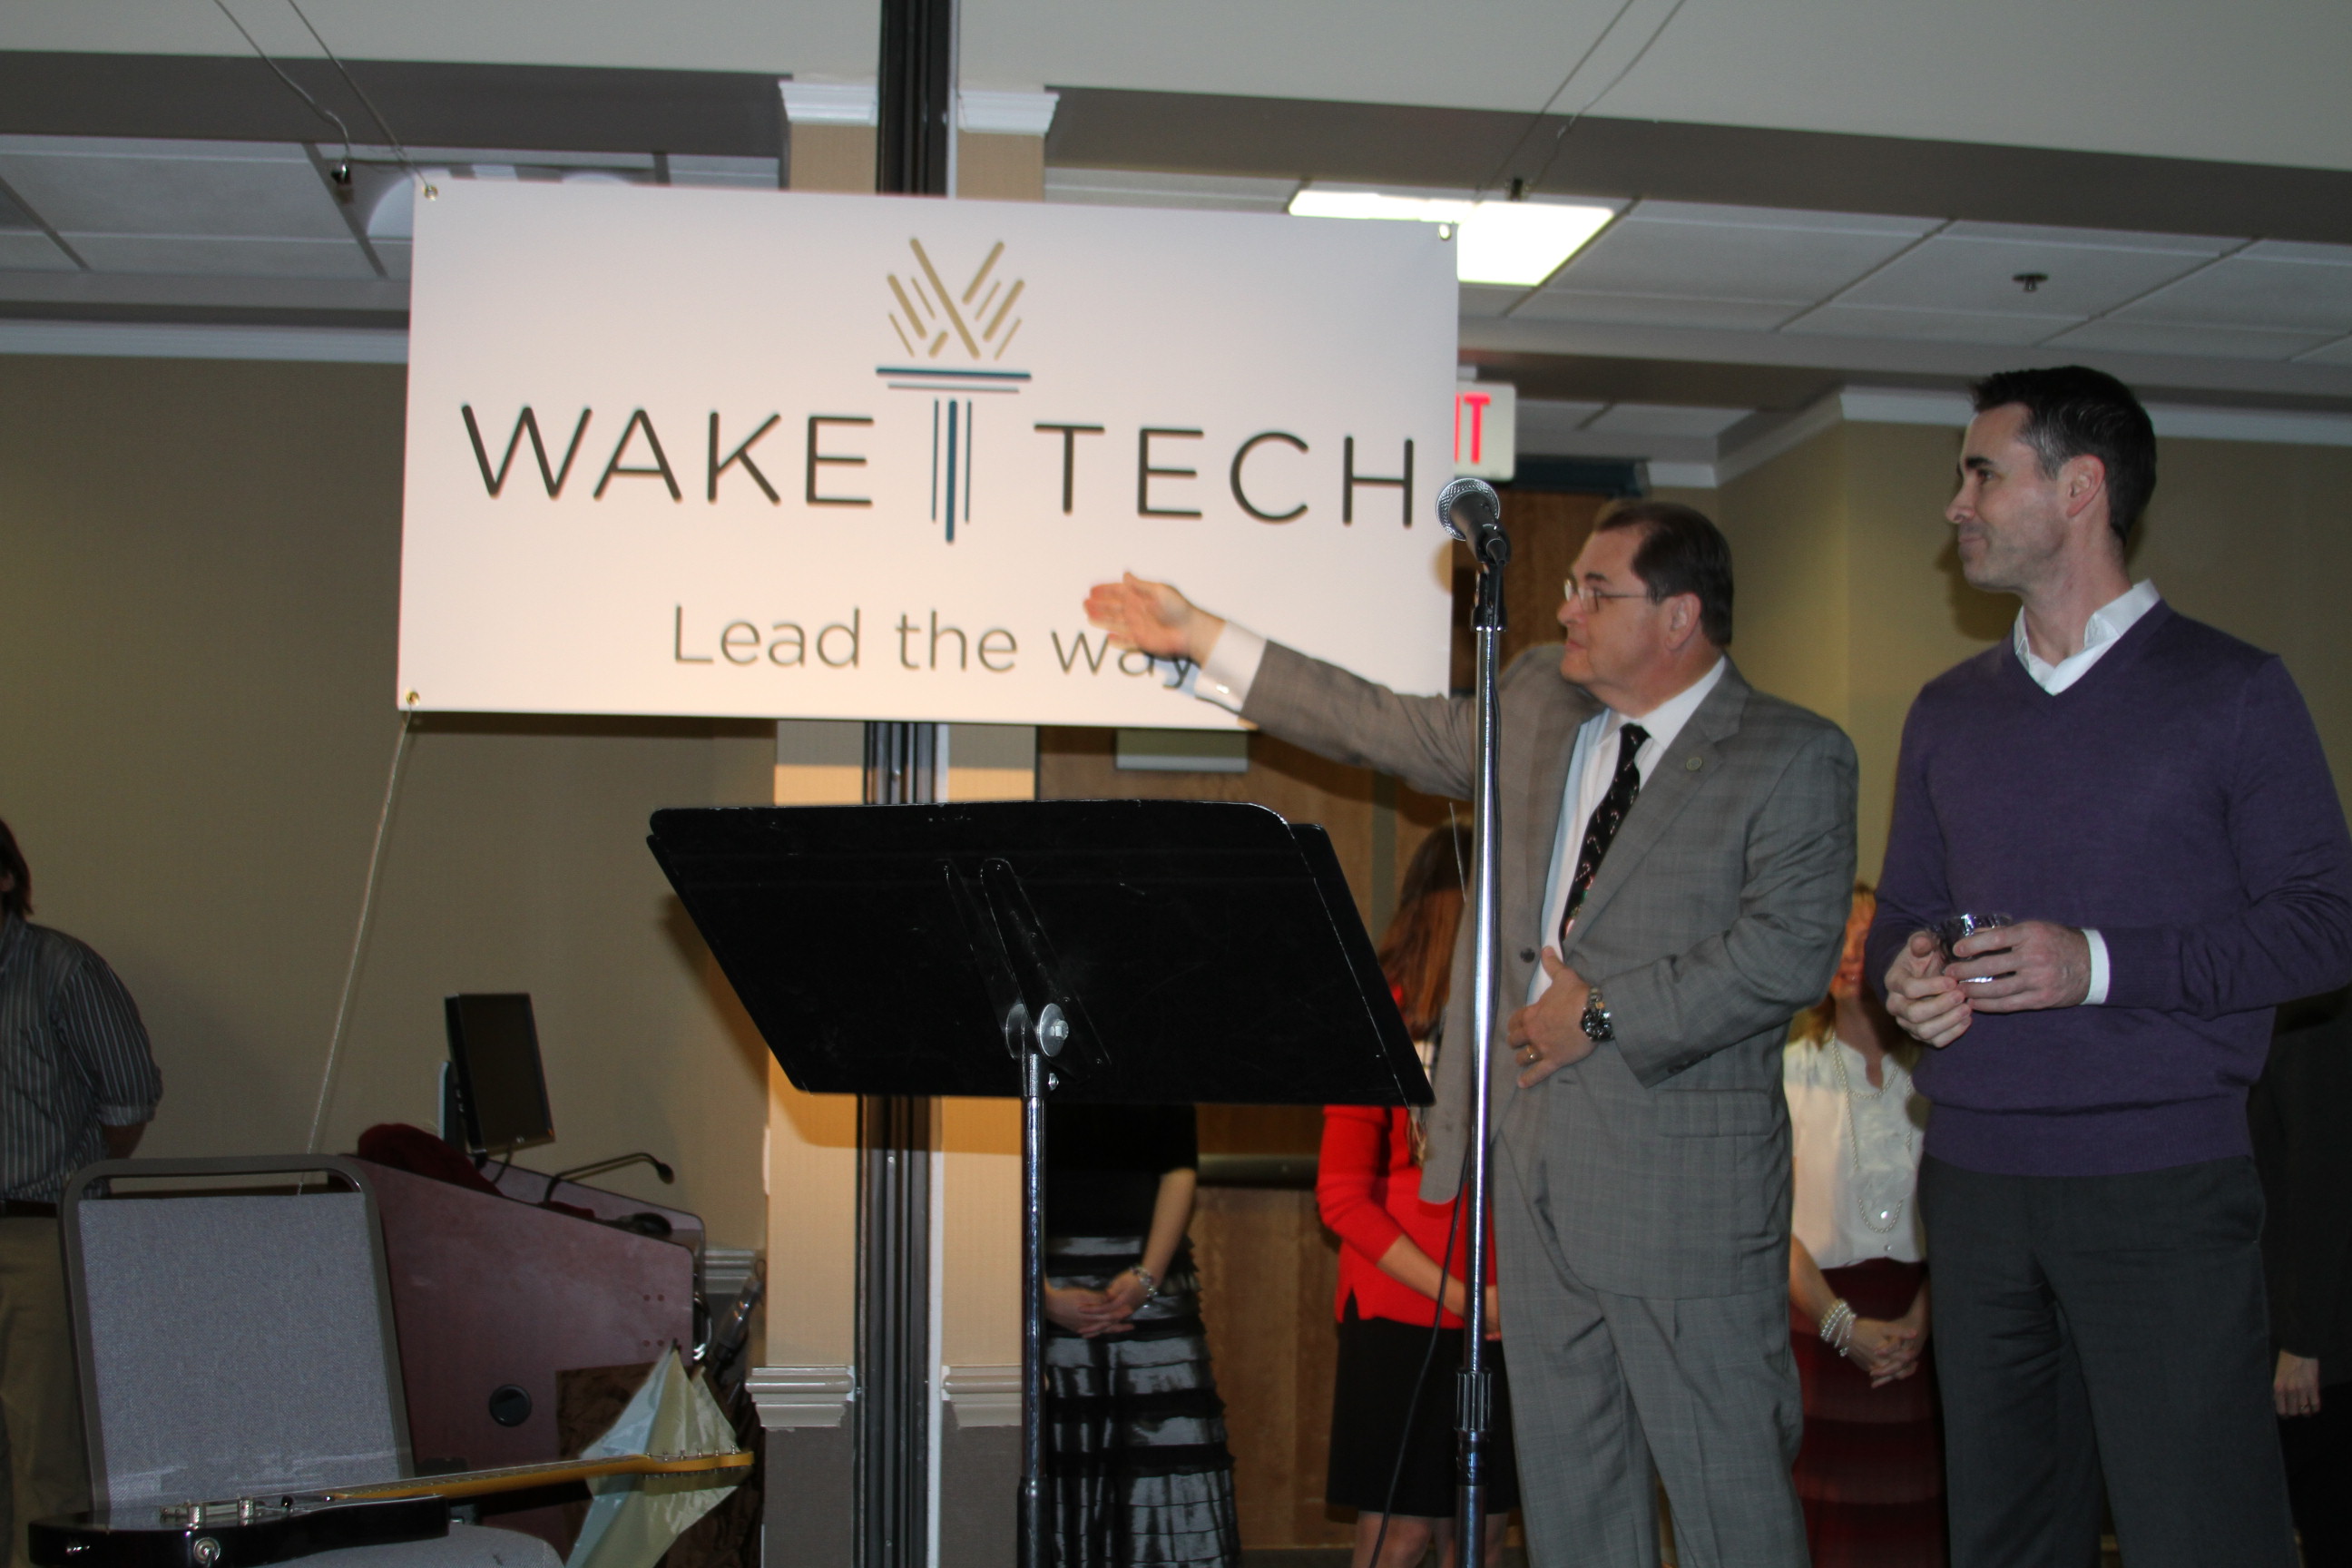 Wake Tech Launches New Brand